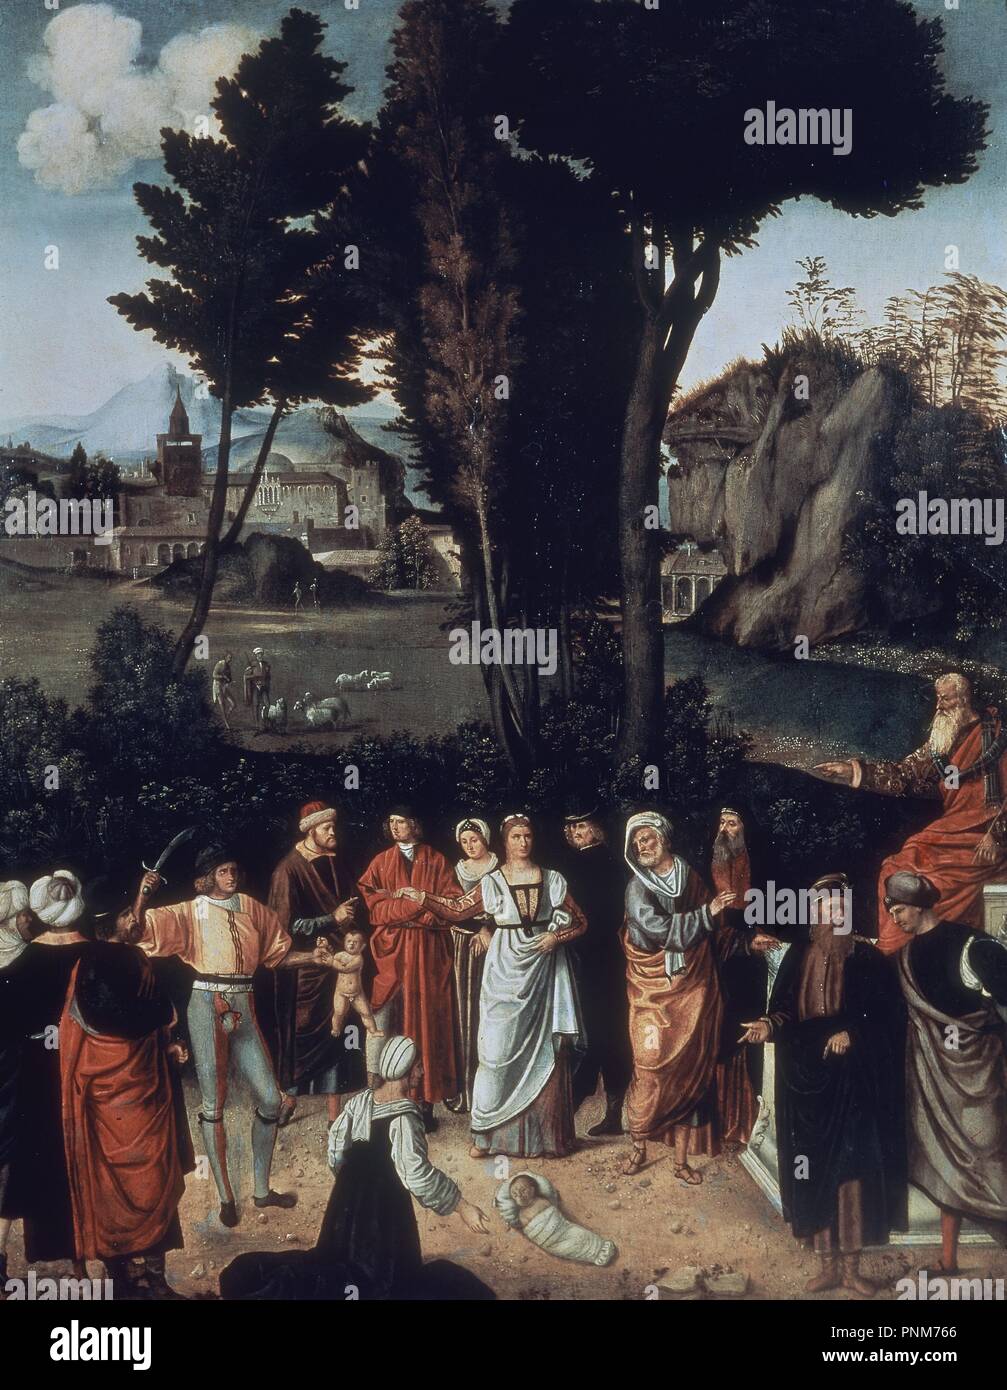 The Judgement of Solomon - 1505 - 89x72 cm - oil on panel - Italian Renaissance. Author: GIORGIONE. Location: GALERIA DE LOS UFFIZI. Florenz. ITALIA. Stock Photo